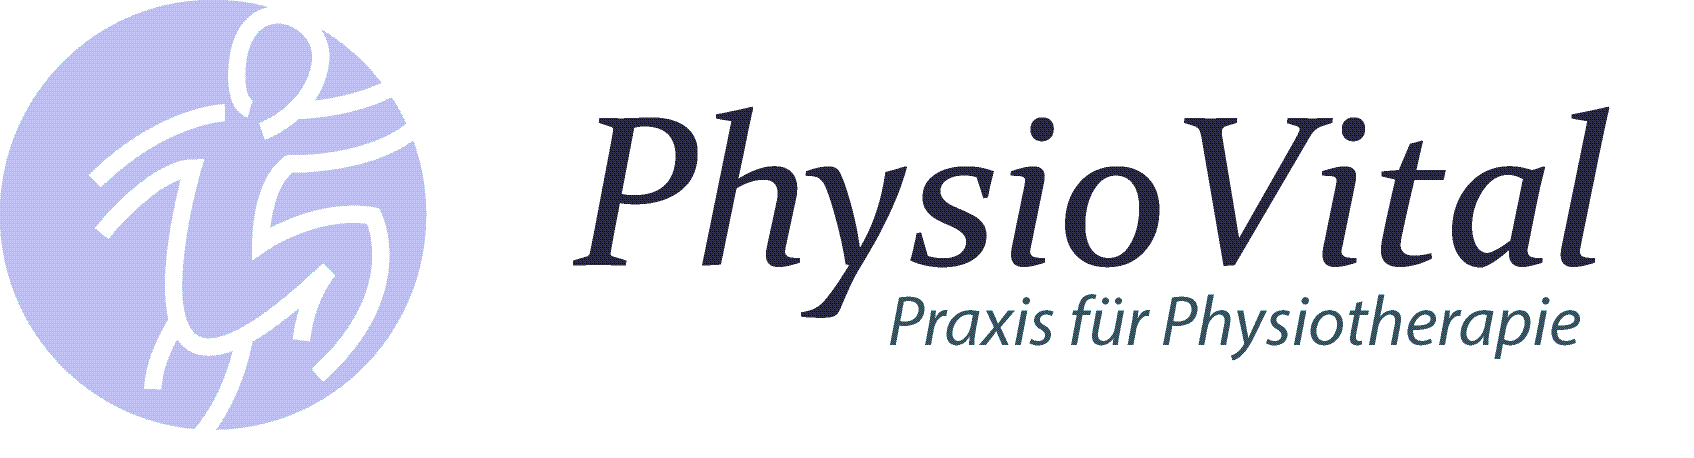 PhysioVital